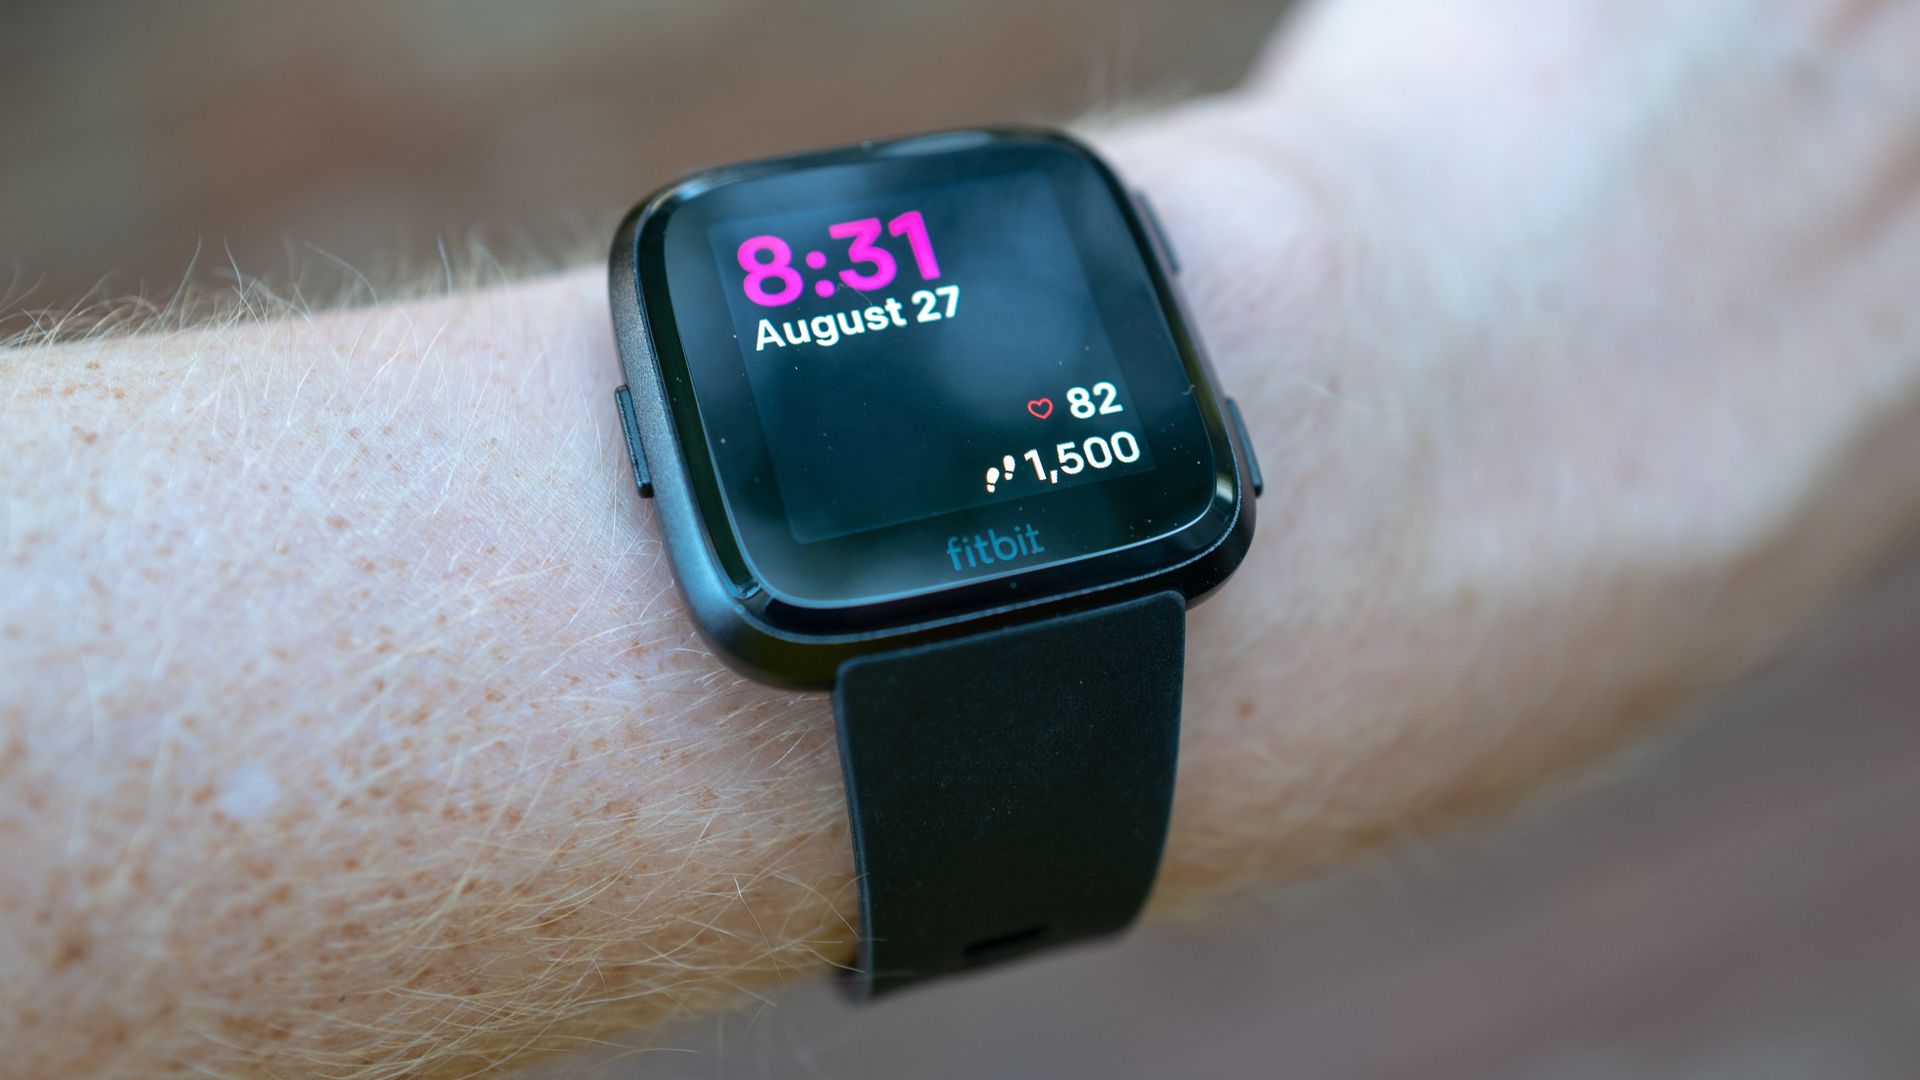  The Fitbit Versa smart watch.